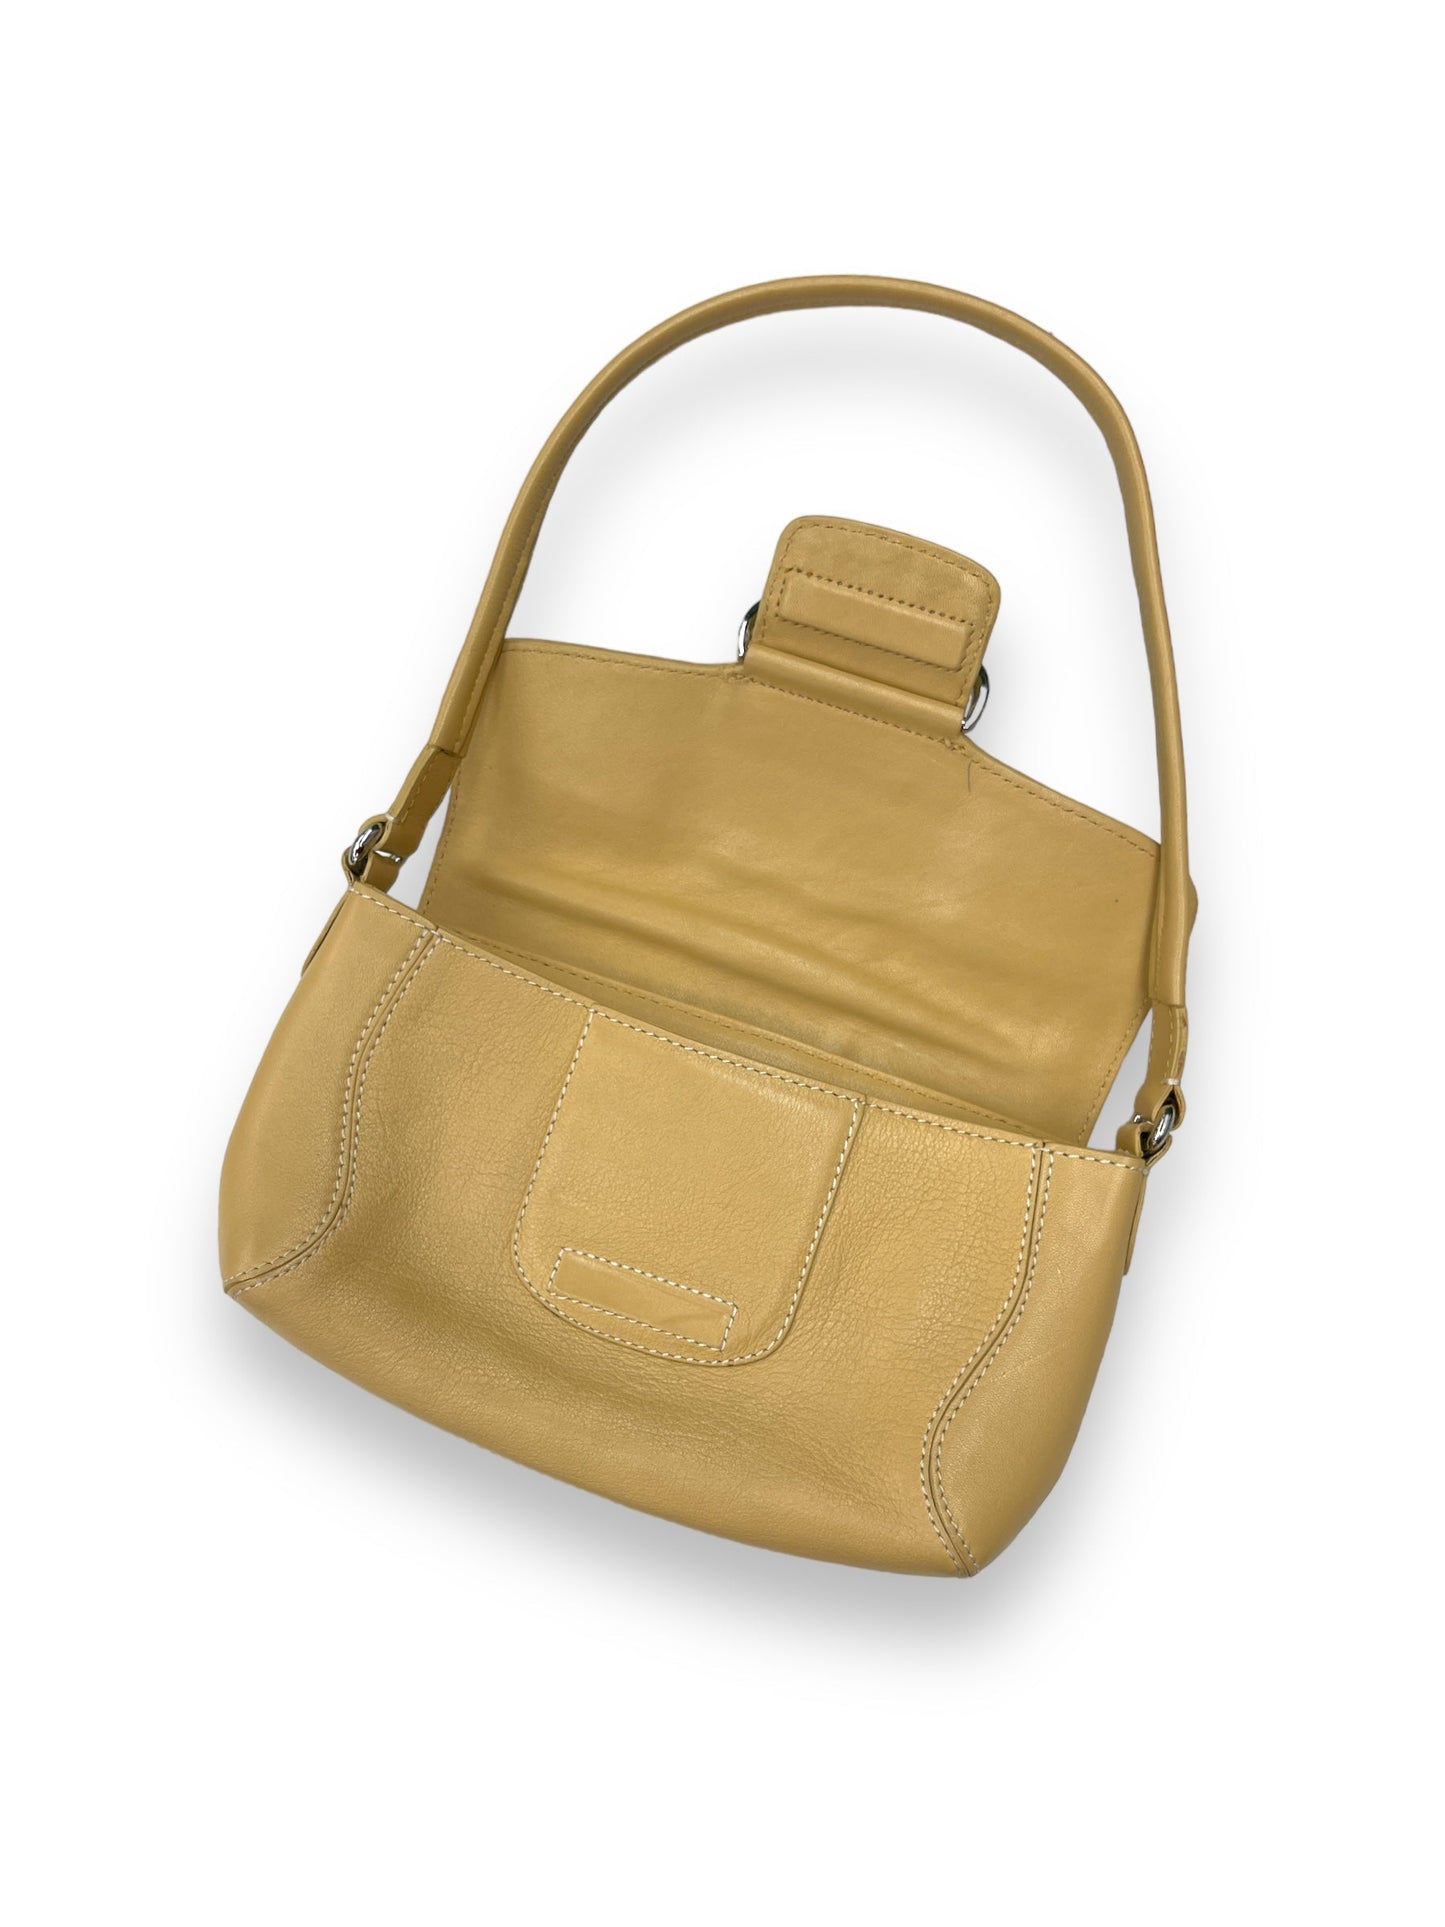 Handbag Designer By Cole-haan  Size: Small